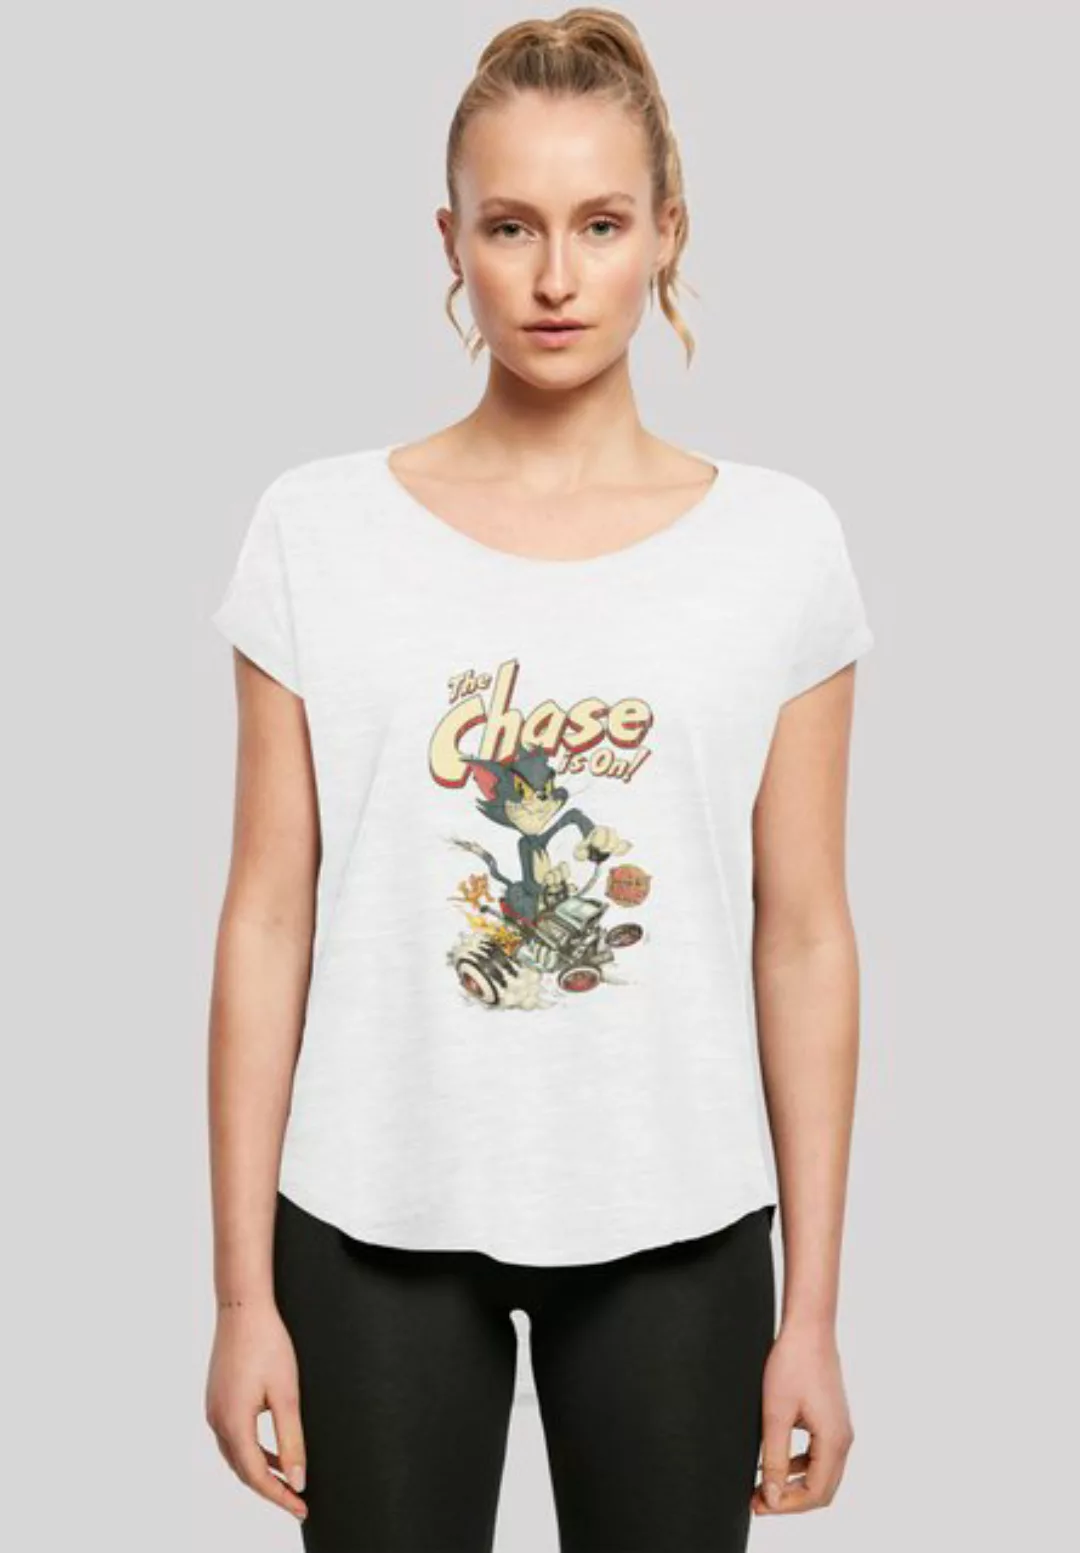 F4NT4STIC T-Shirt Tom and Jerry TV Serie The Chase Is On Damen,Premium Merc günstig online kaufen